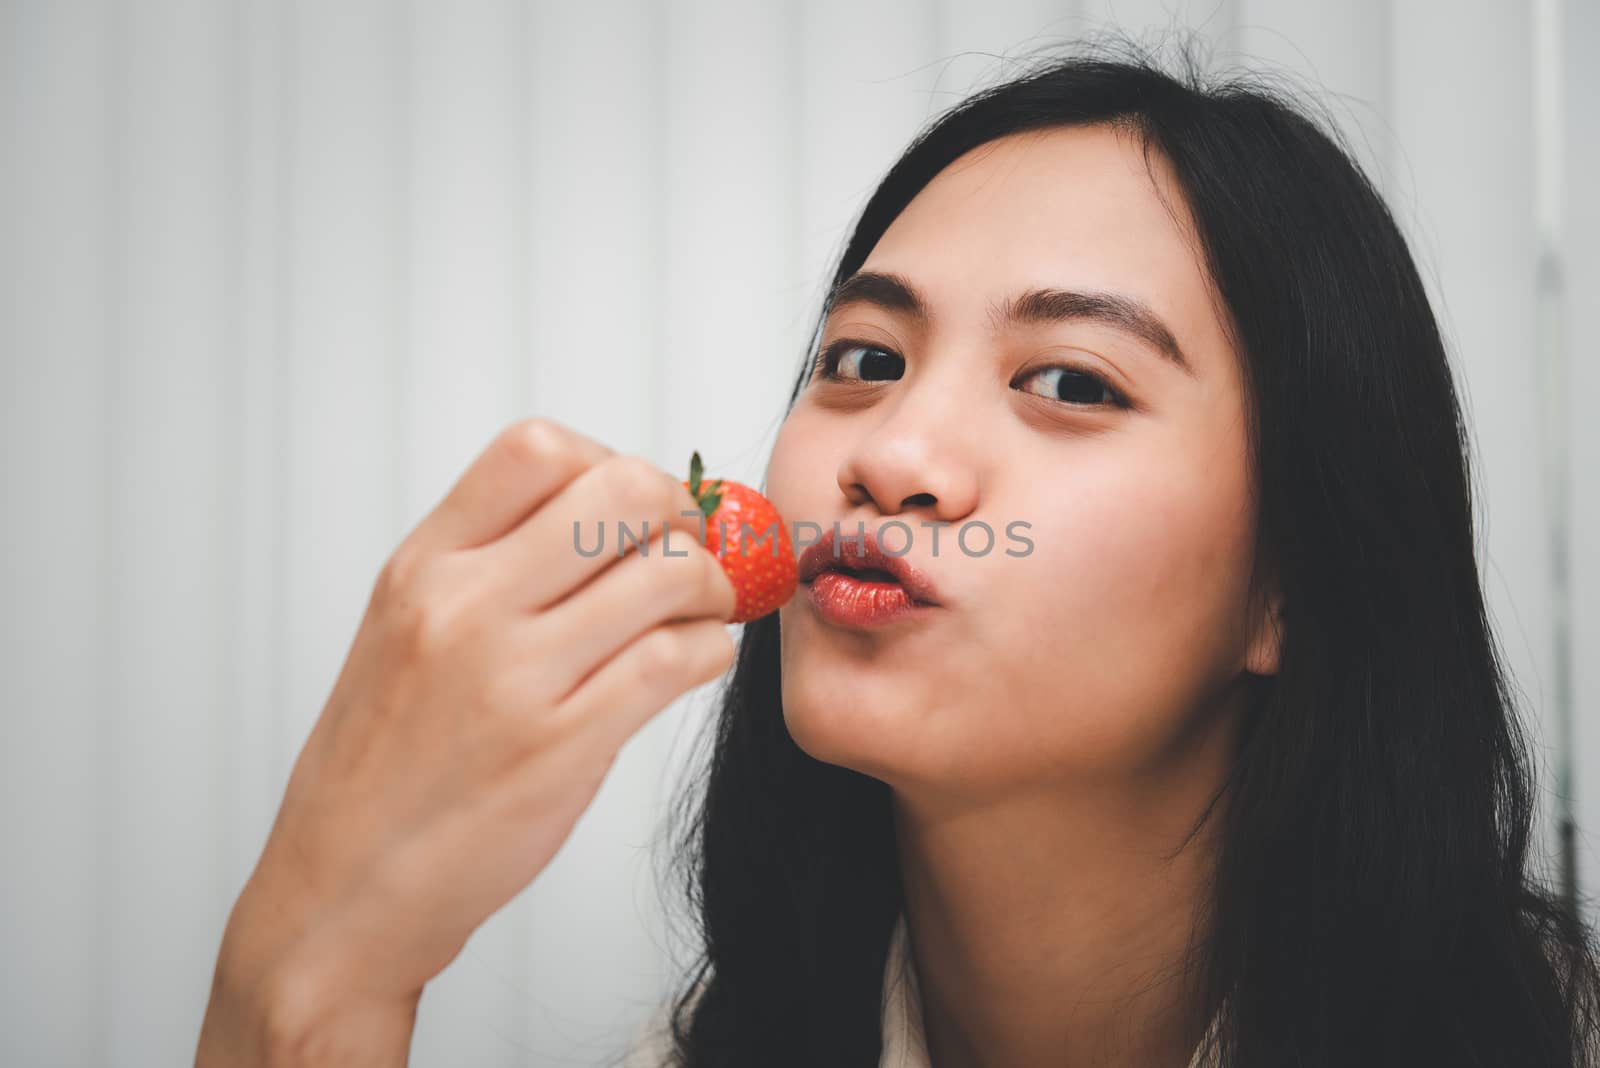 Woman eat strawberry red berry fruit sweet juicy by PongMoji